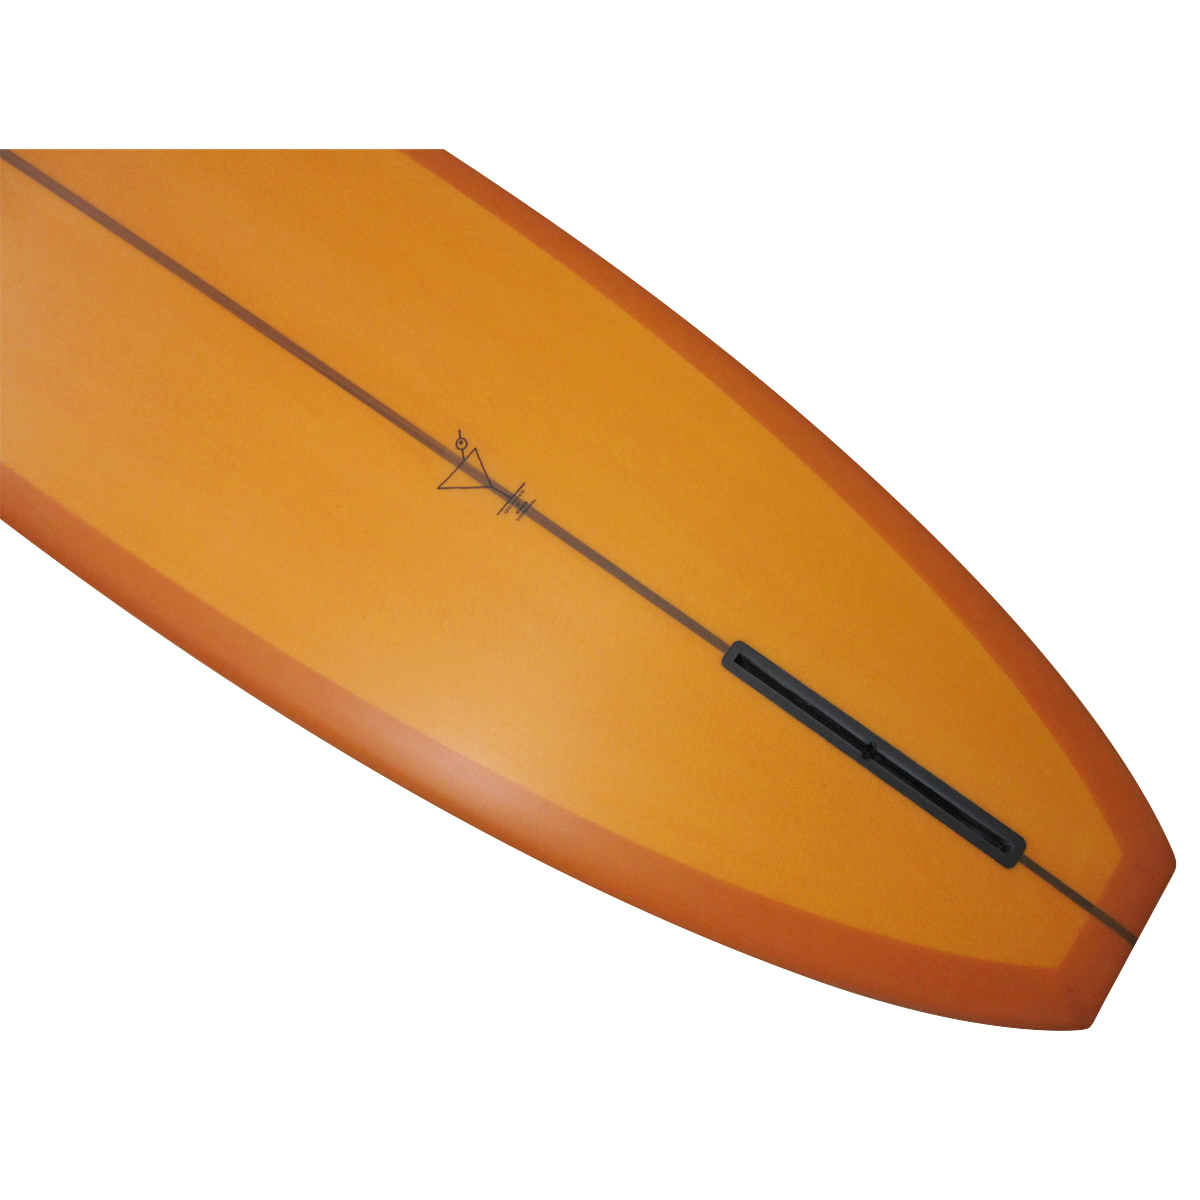 DASH SURFBOARDS / Dirty Martini 9`4